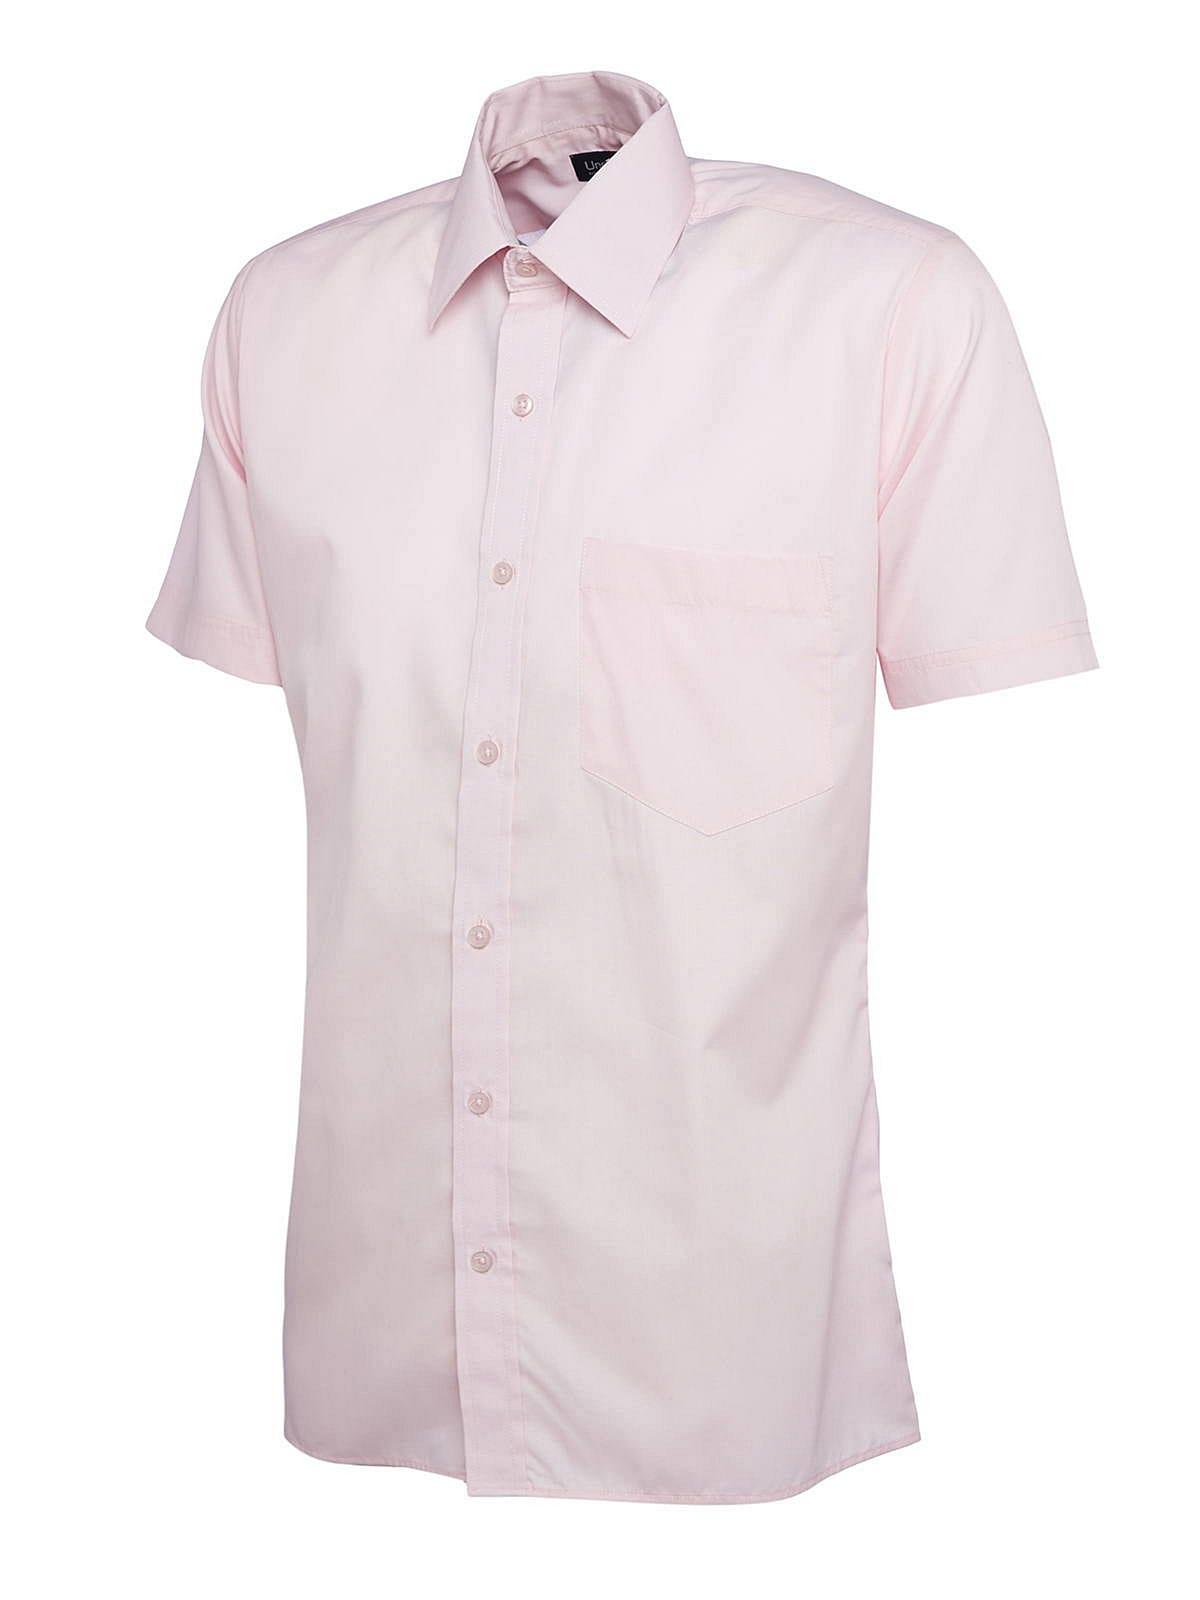 Uneek UC710 ? Mens Poplin Half Sleeve Shirt in Pink (Product Code: UC710)